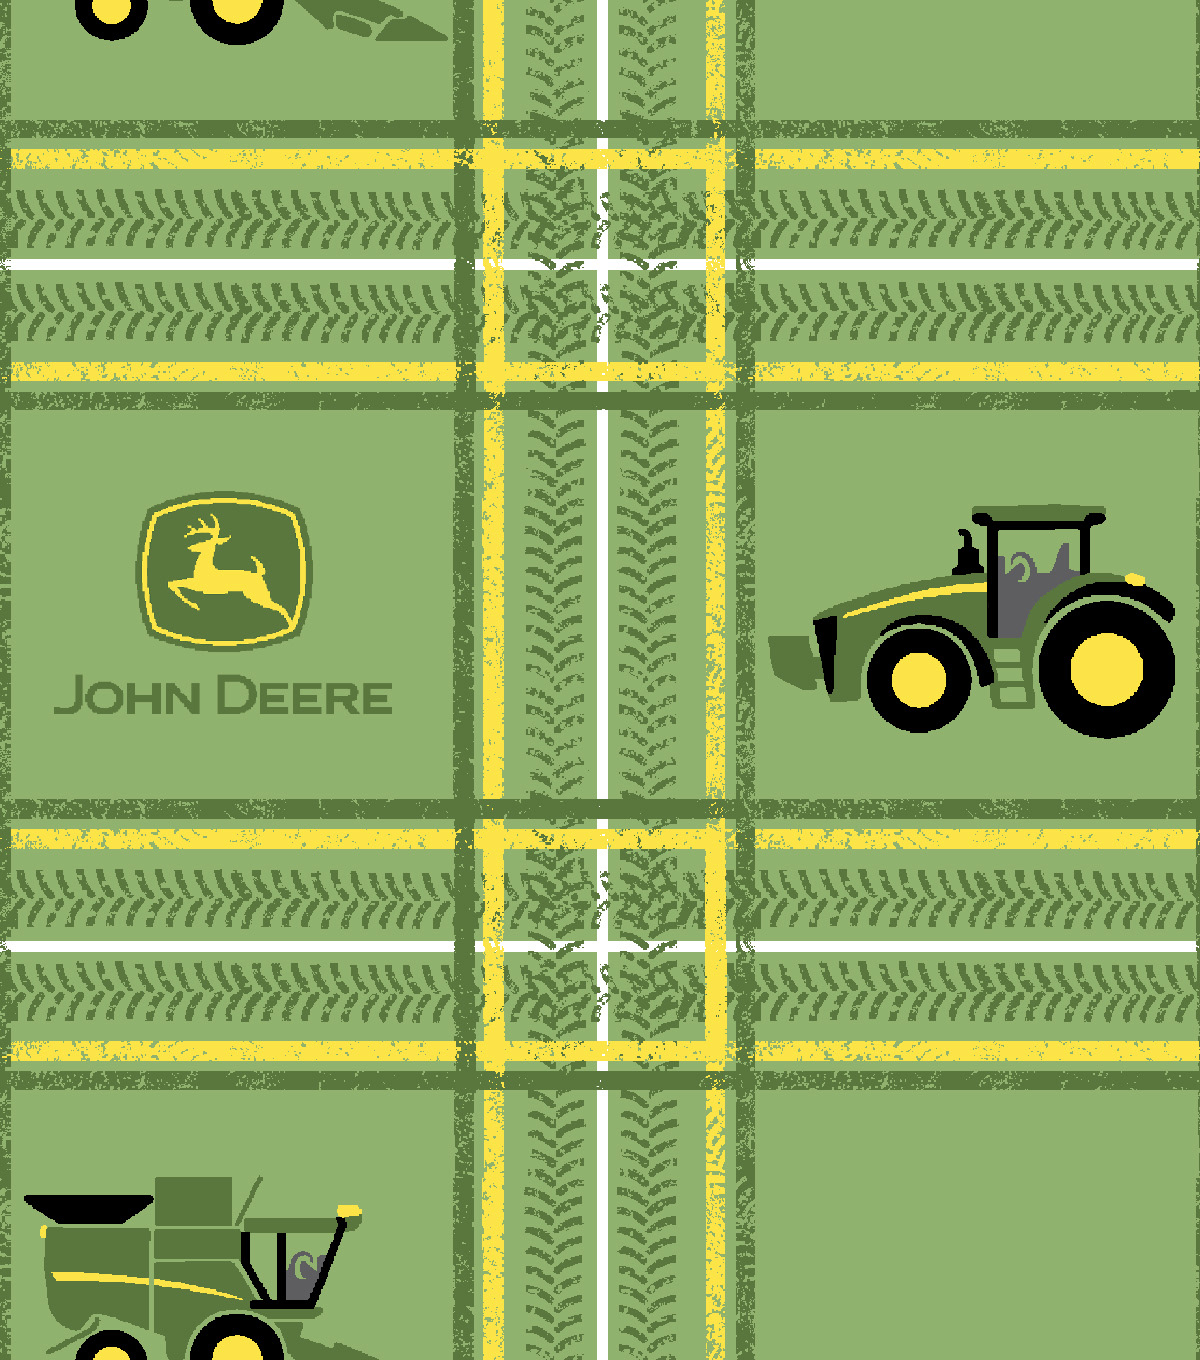 John Deere Embroidery Patterns John Deere Cotton Fabric Green Tractor Plaid